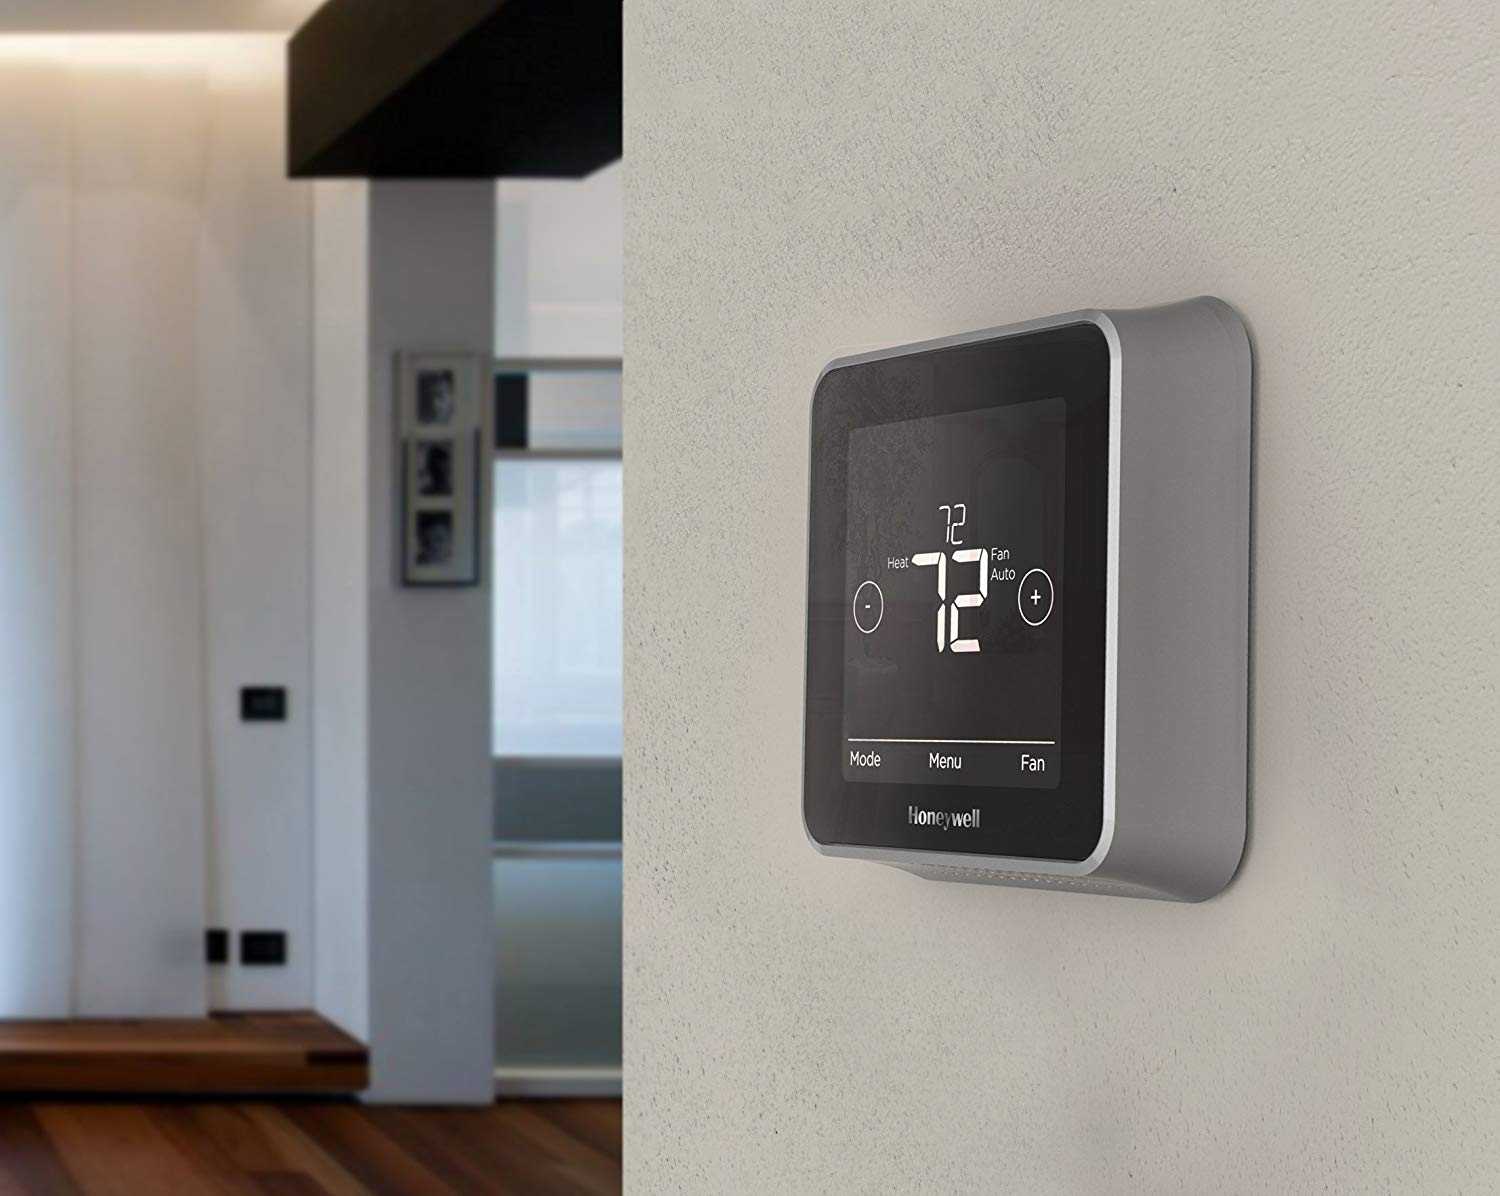 Honeywell Smart Thermostat on hallway wall.